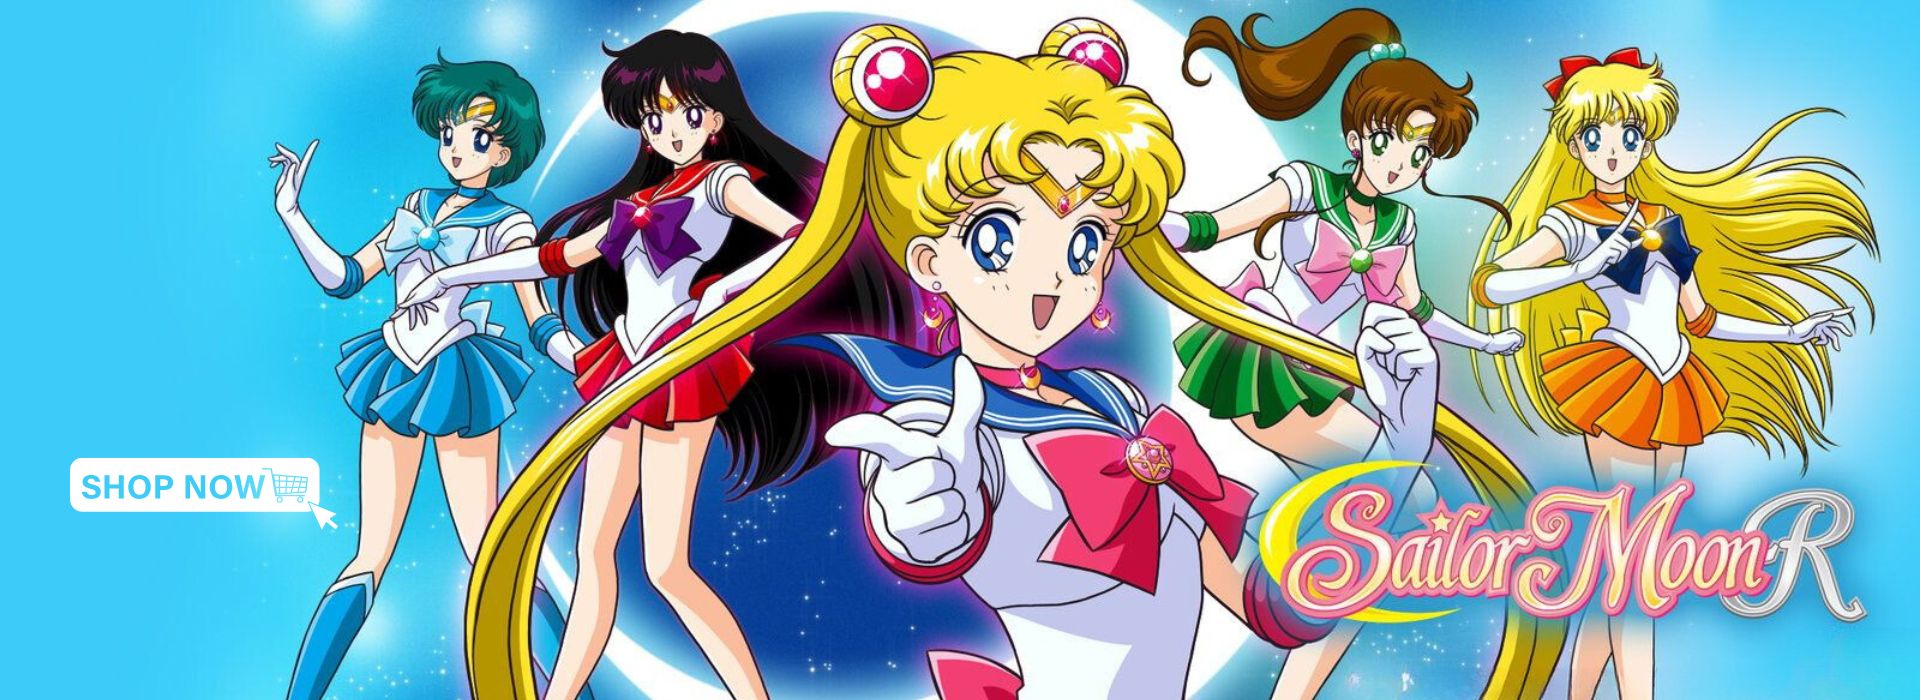 Sailor Moon Store Banner